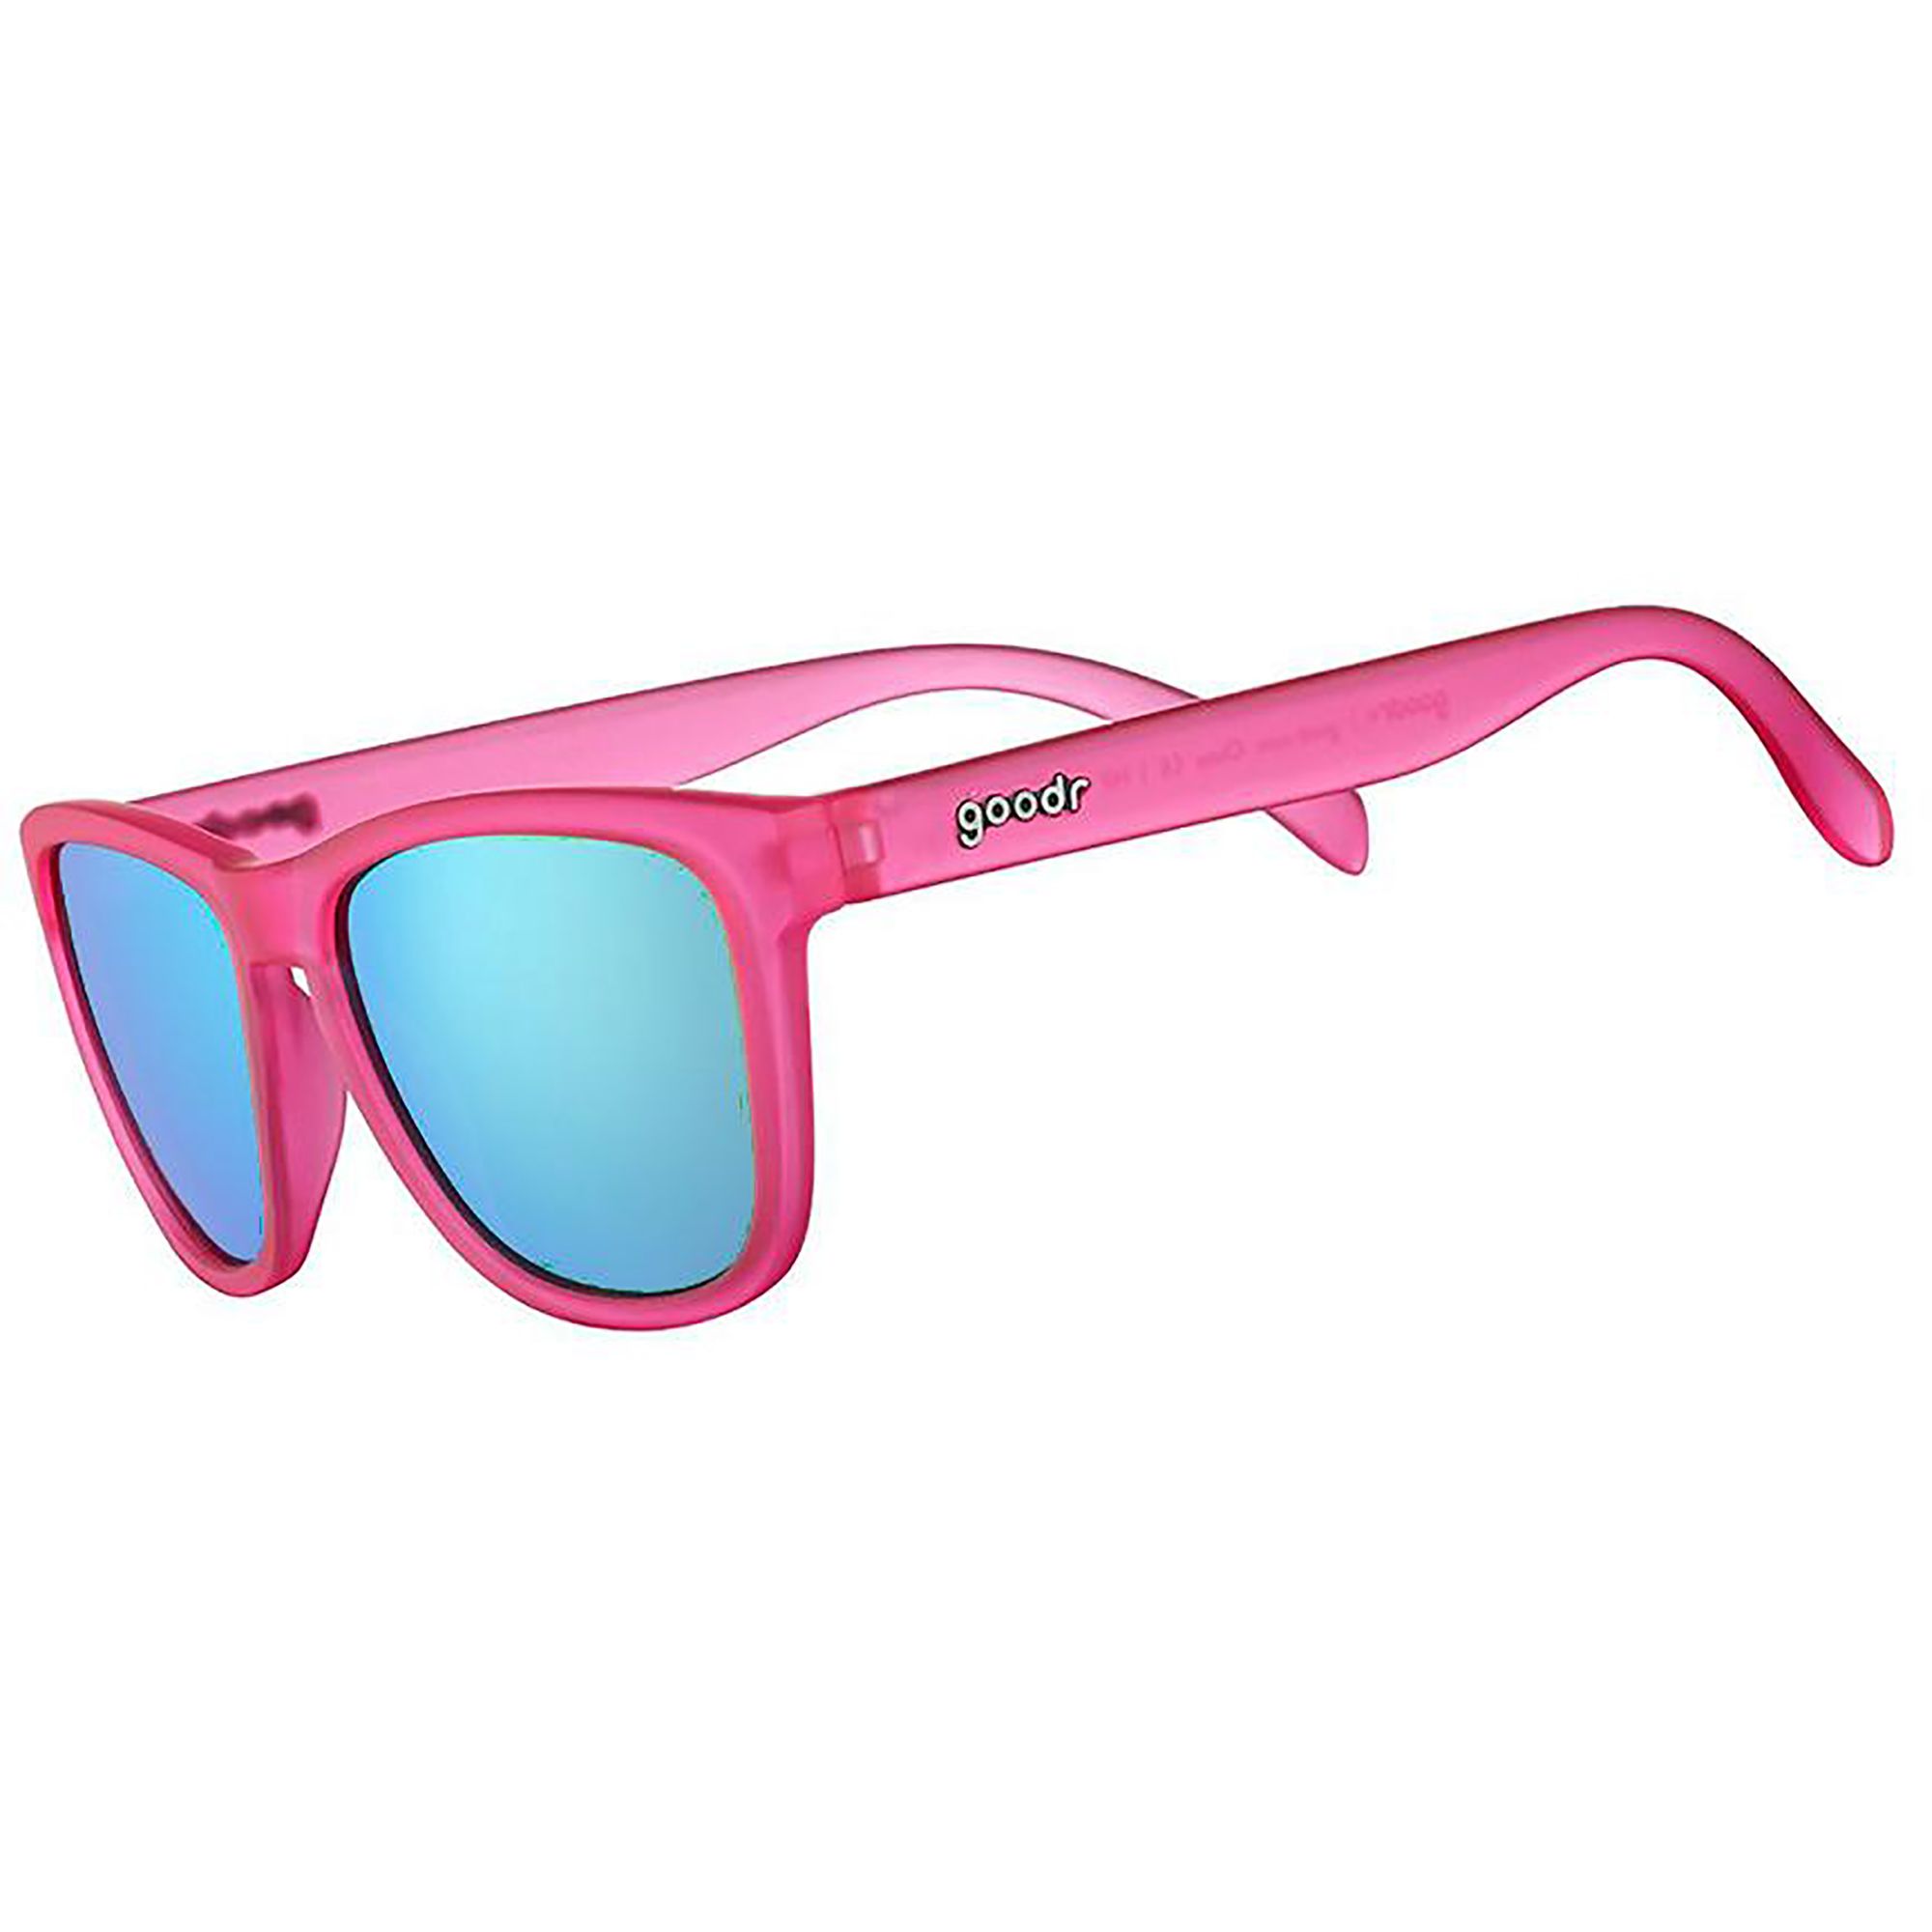 Photos - Sunglasses Goodr Flamingos On A Booze Cruise , Men's, Pink Frame/Teal Lens